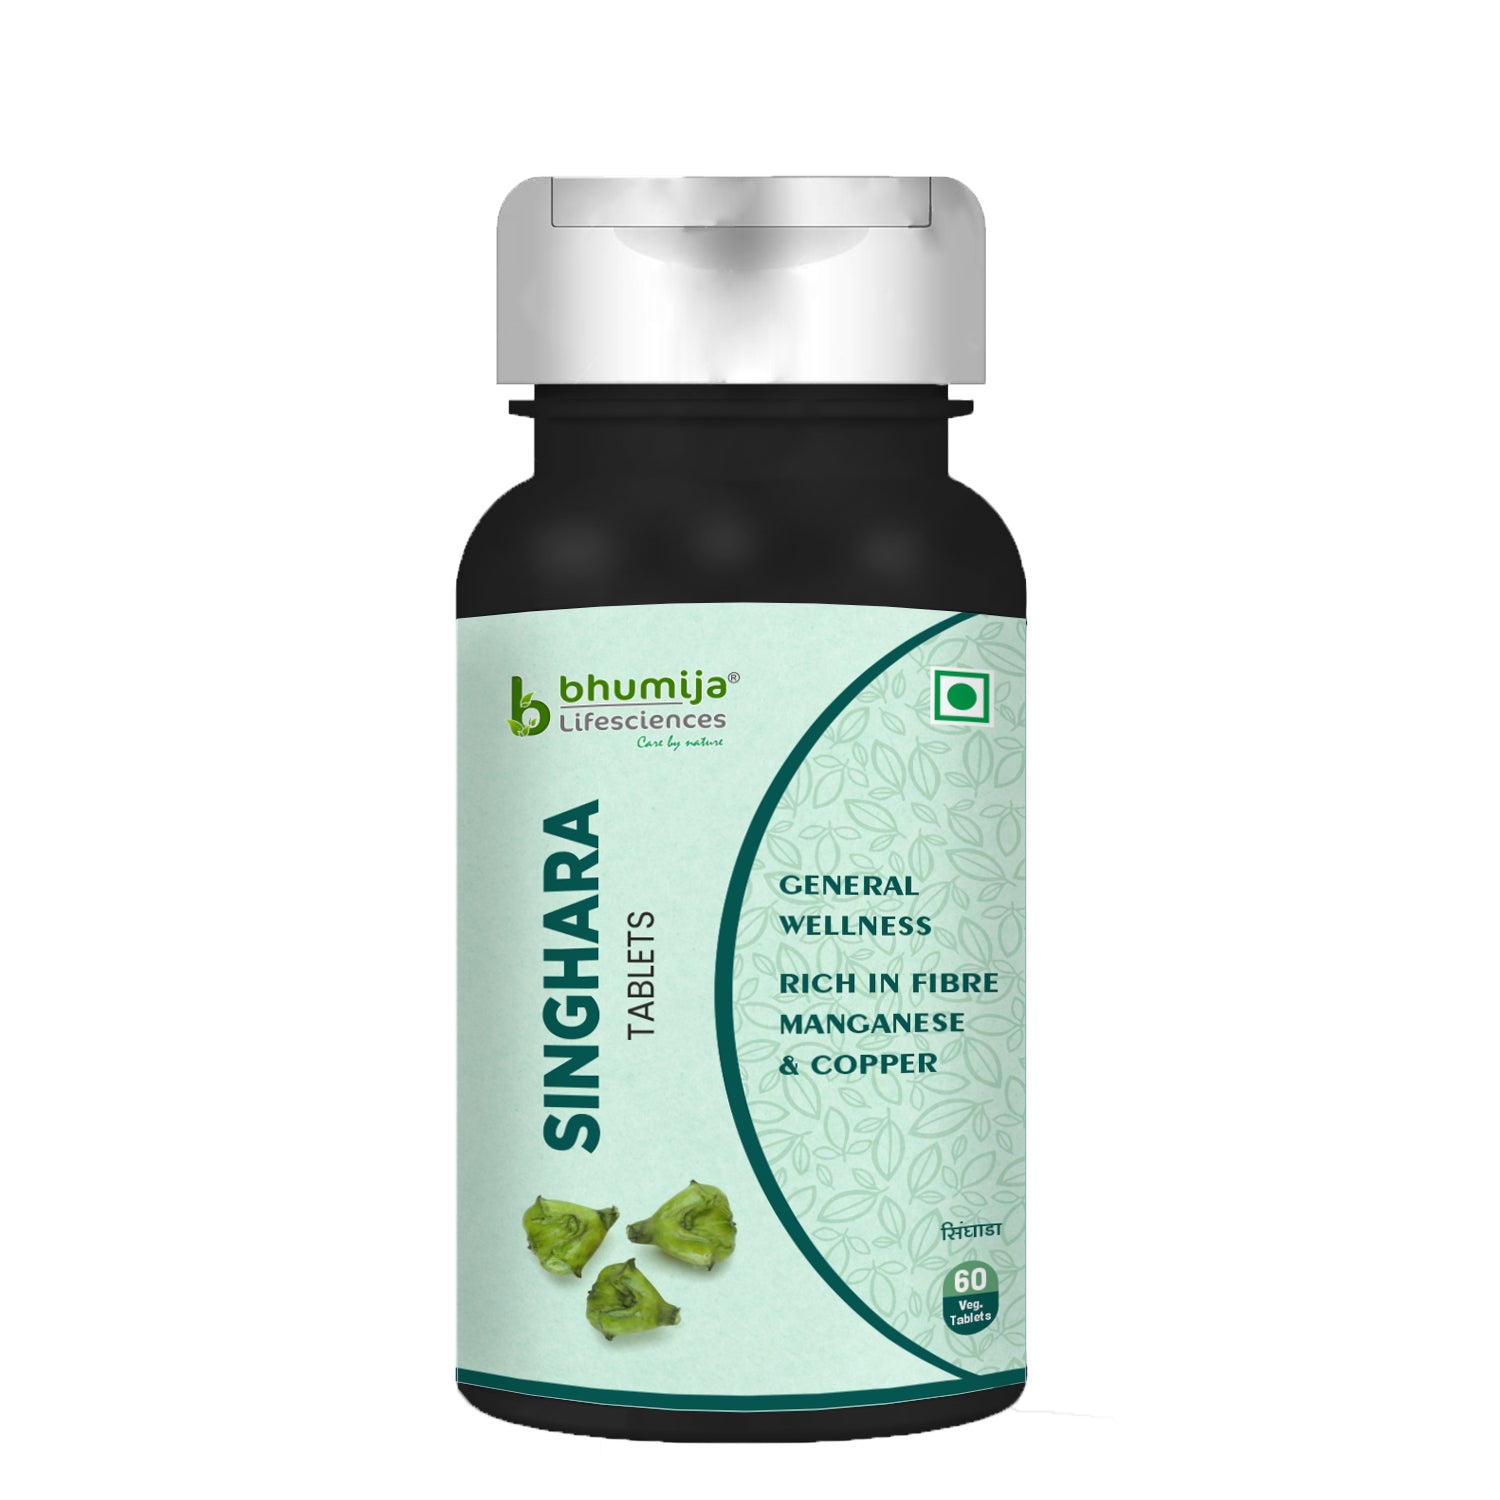 Bhumija Lifesciences Singhara (Water Chestnut) 500mg Tablets (60 Tab), Rich Fibre source for General Wellness